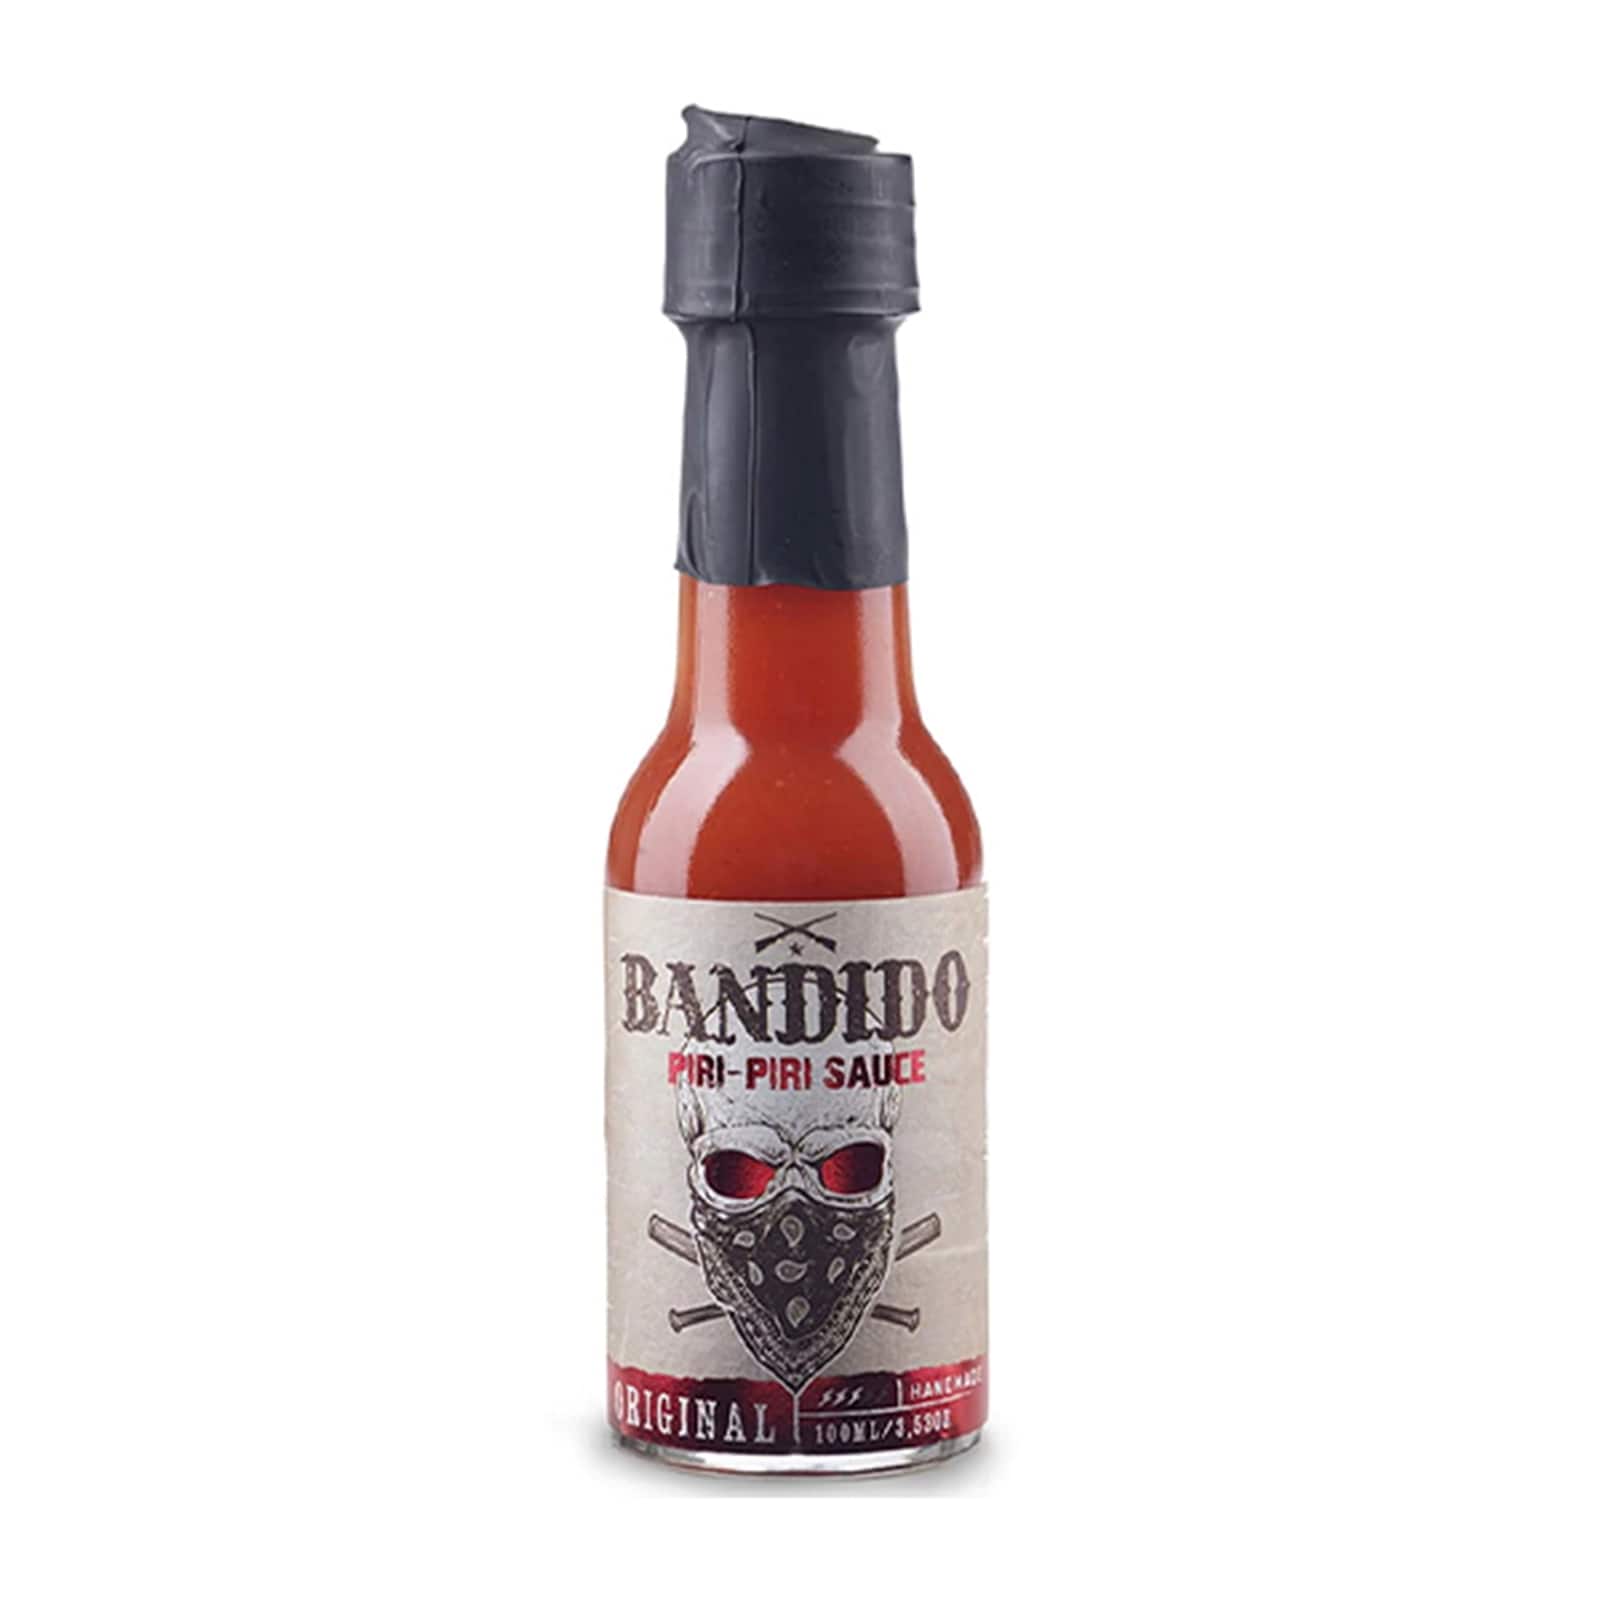 Bandido Piri-Piri Sauce